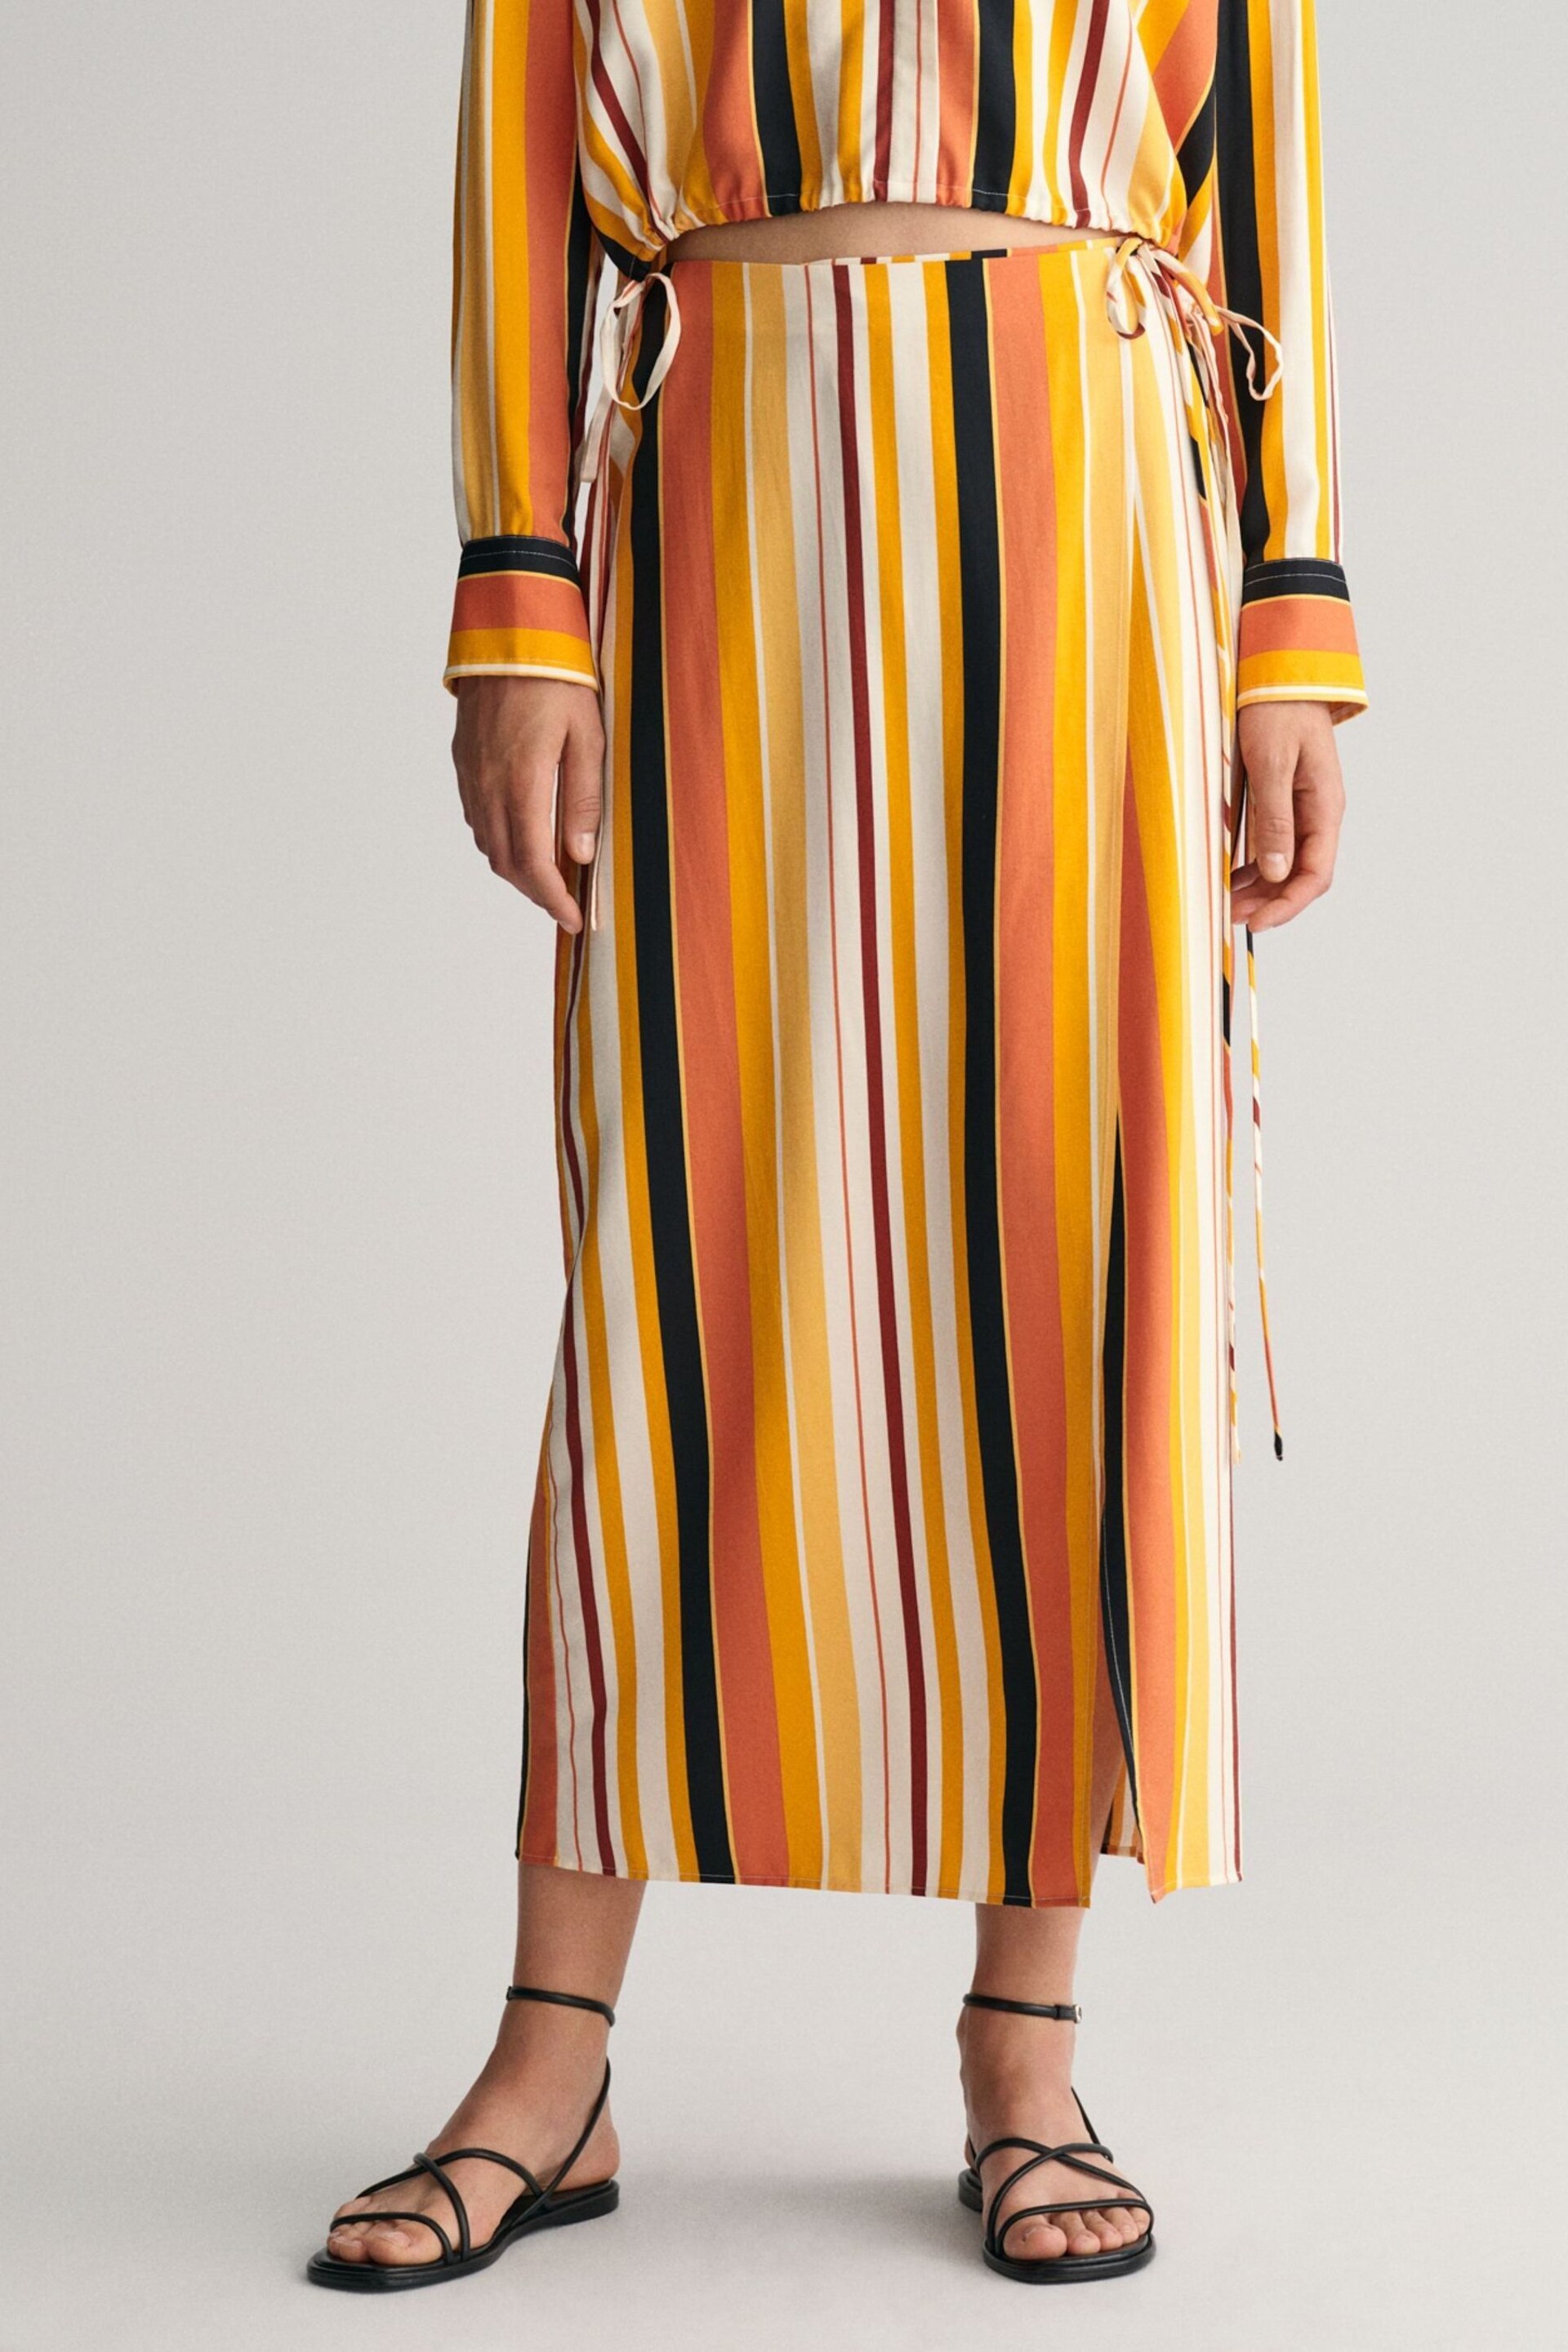 GANT Yellow Striped Wrap Skirt - Image 3 of 6